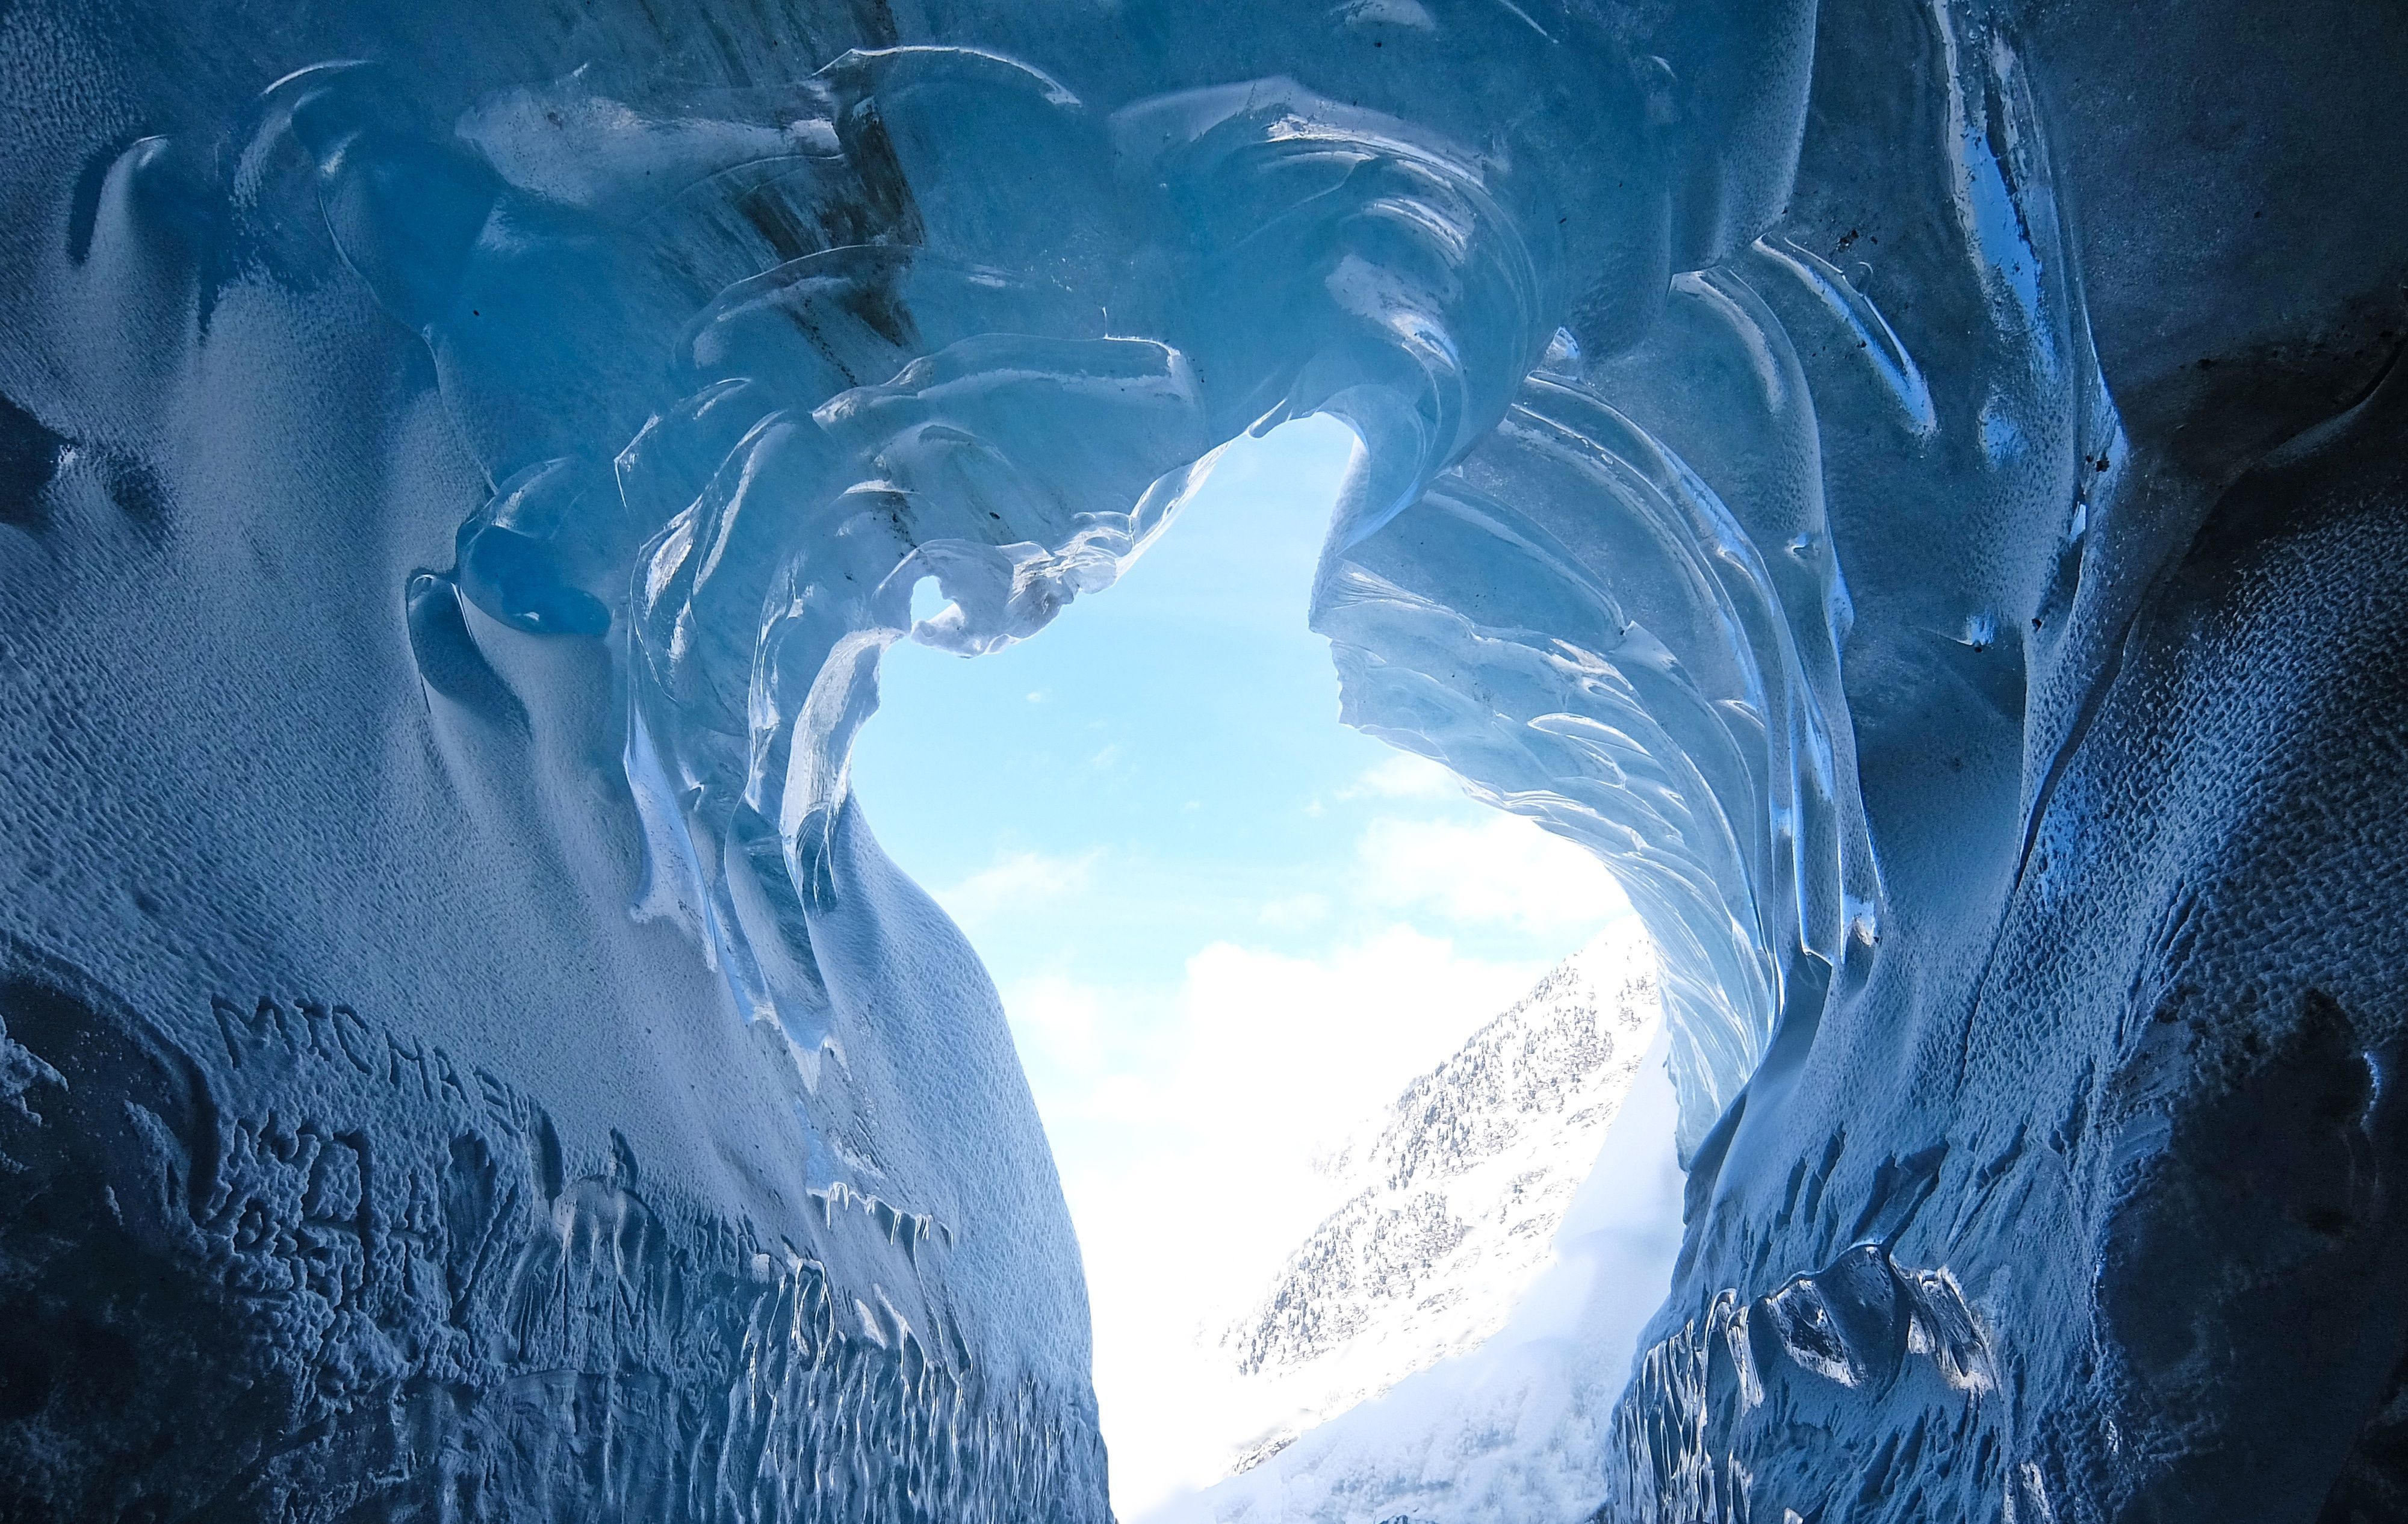 Ice Cave Wallpaper